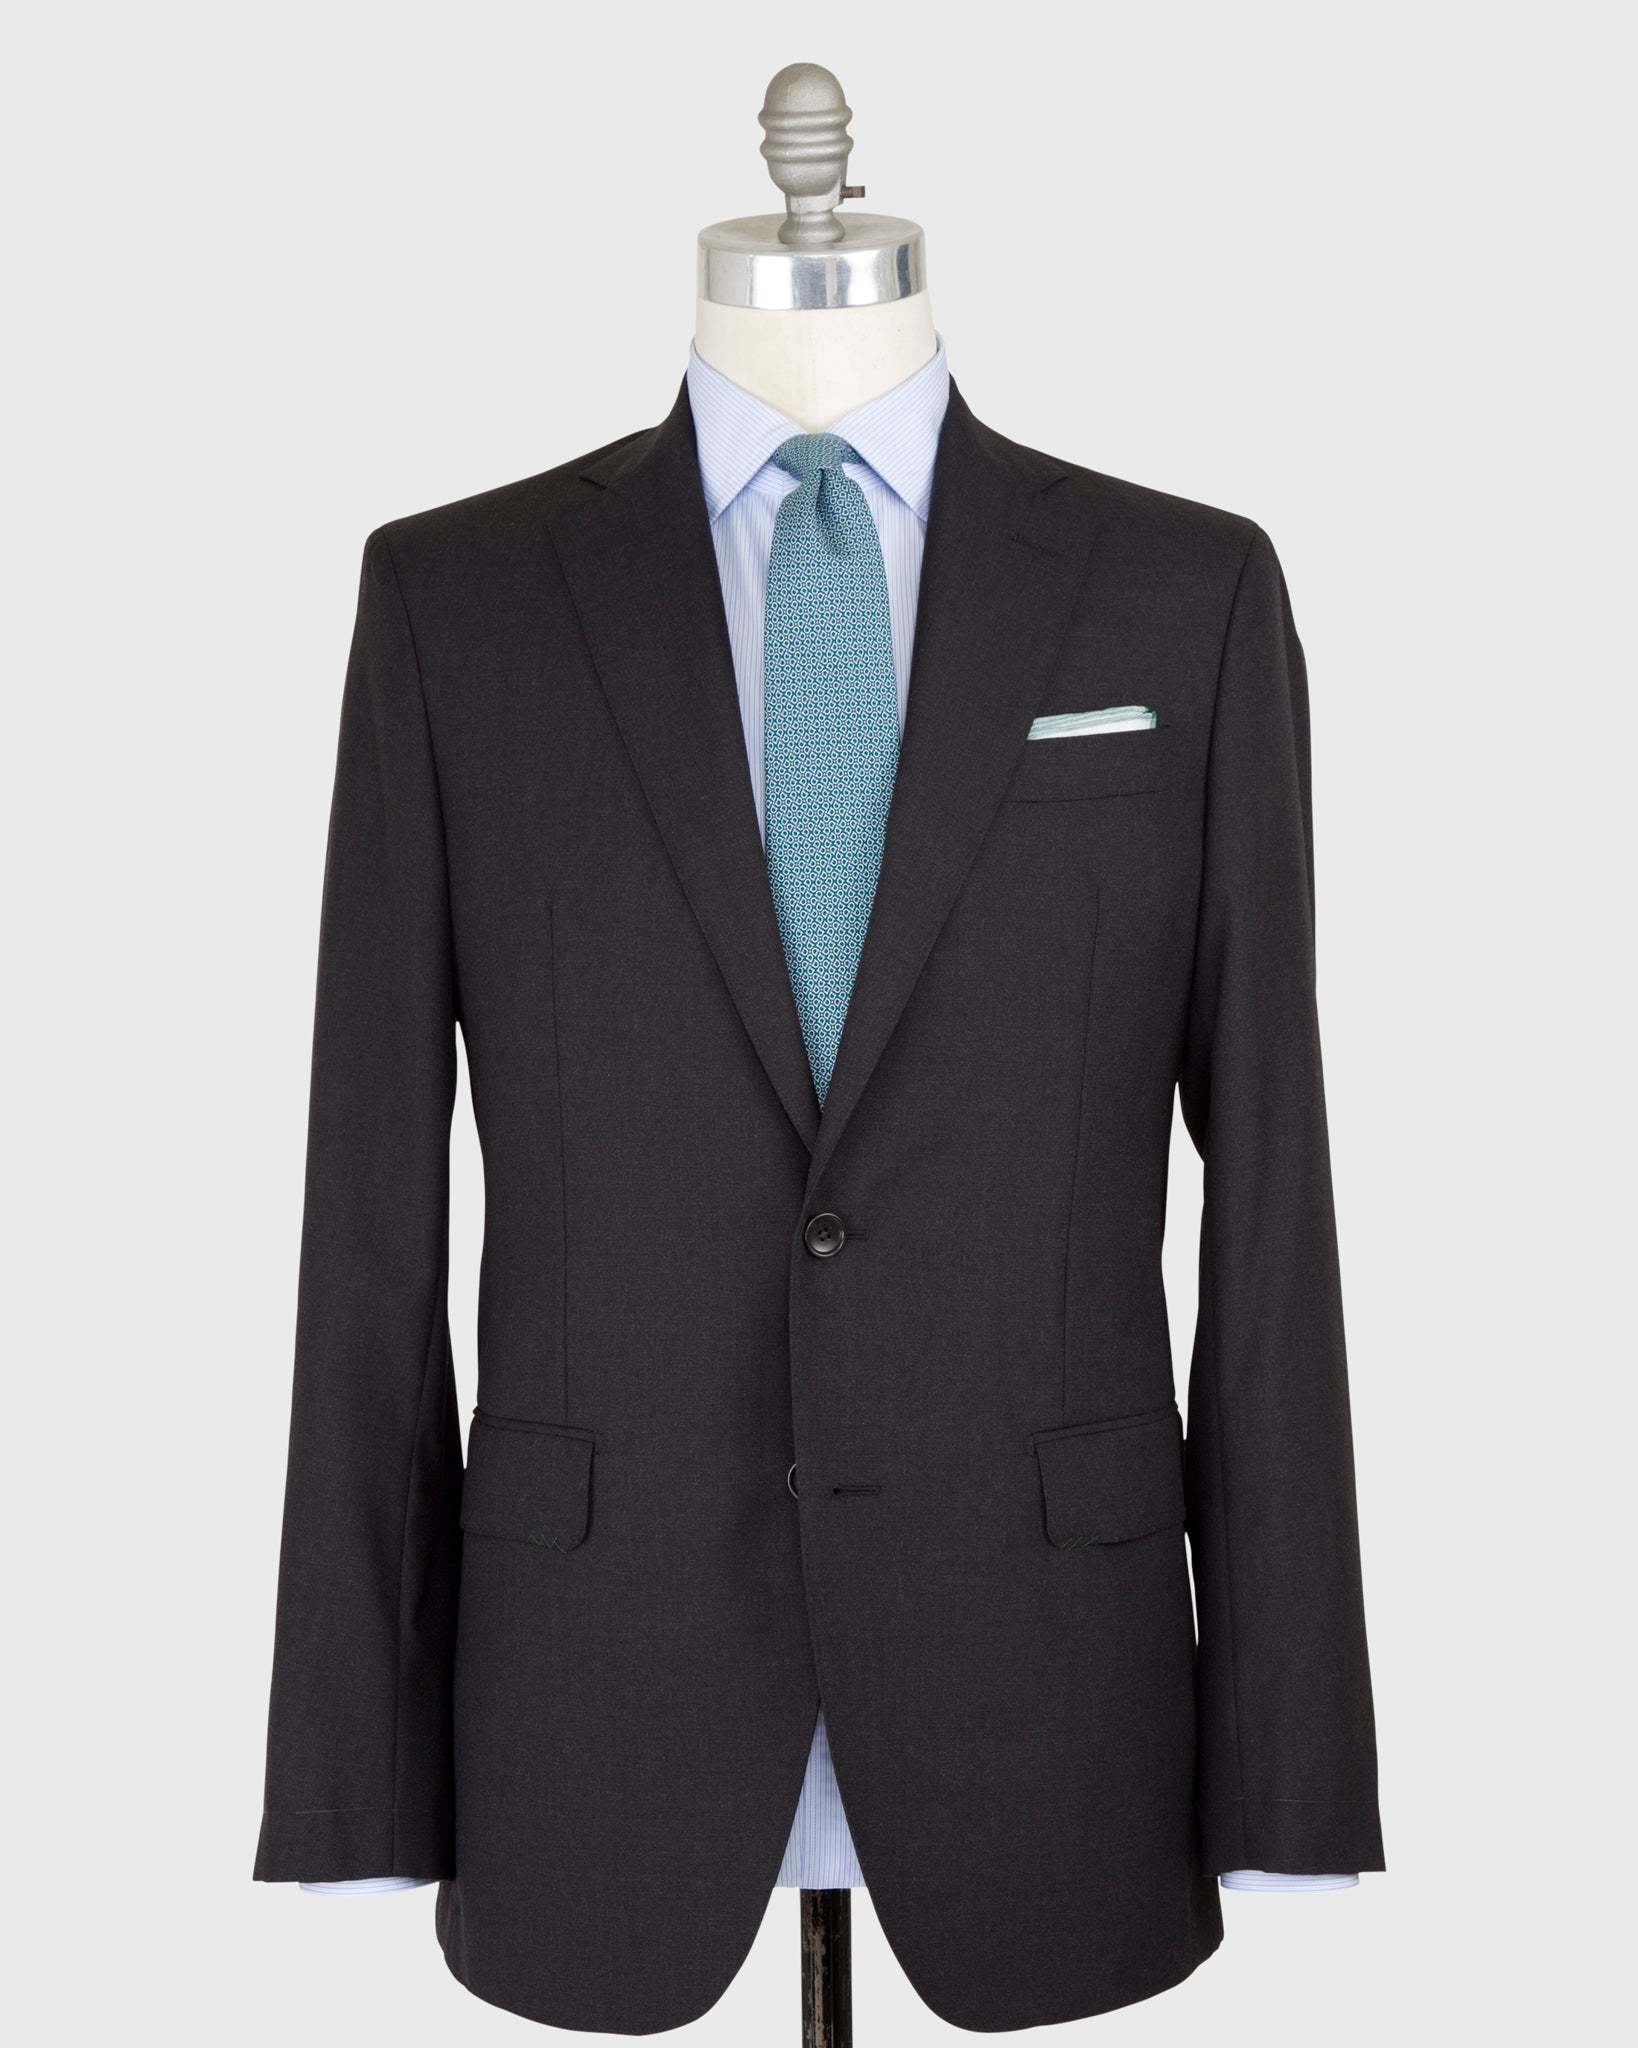 Kincaid No. 2 Suit in Charcoal Plainweave